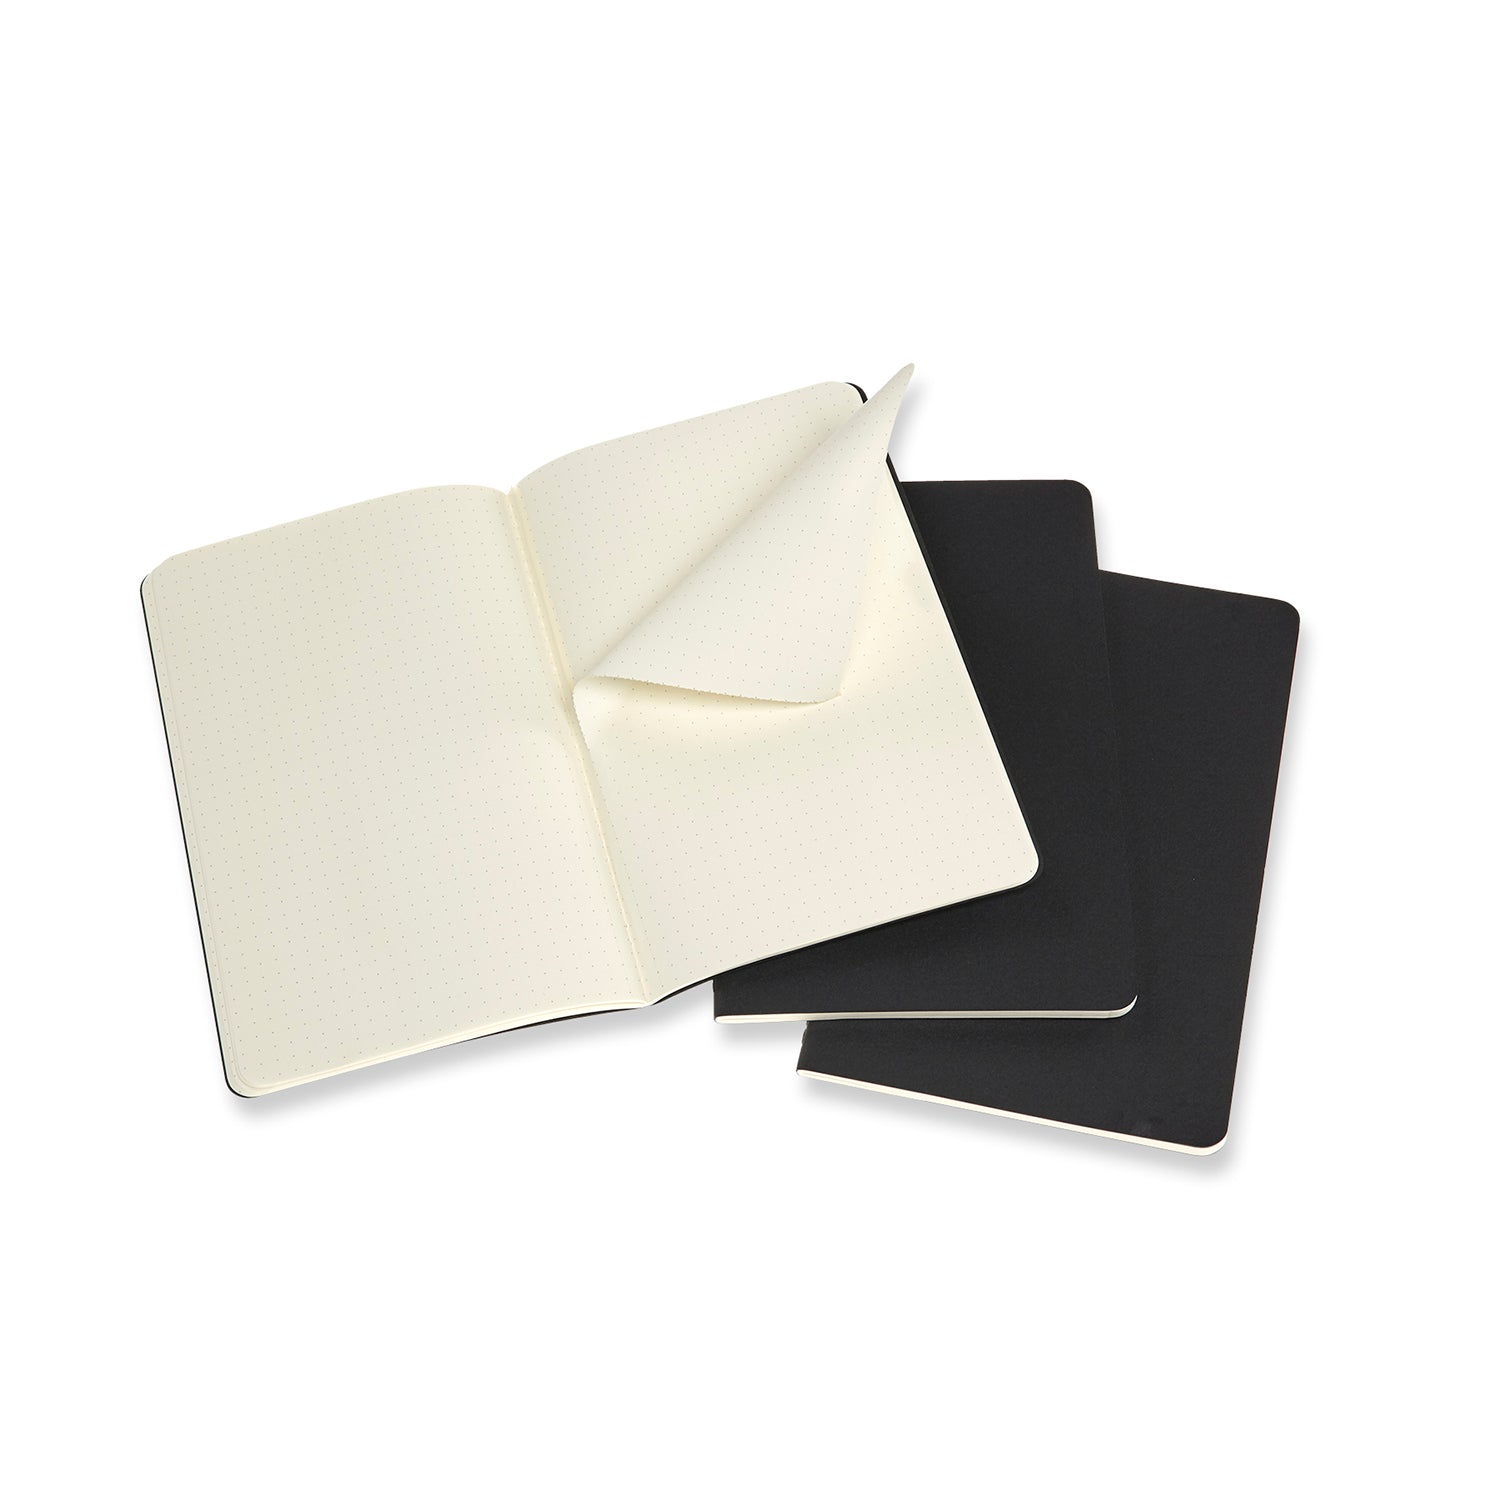 Dark Slate Gray Large Cahier Notebook - Set of 3 Black / Ruled / Large,Black / Plain / Large,Black / Dotted / Large,Black / Squared / Large,Brisk Blue / Ruled / Large,Brisk Blue / Plain / Large,Brisk Blue / Dotted / Large,Brisk Blue / Squared / Large Moleskine